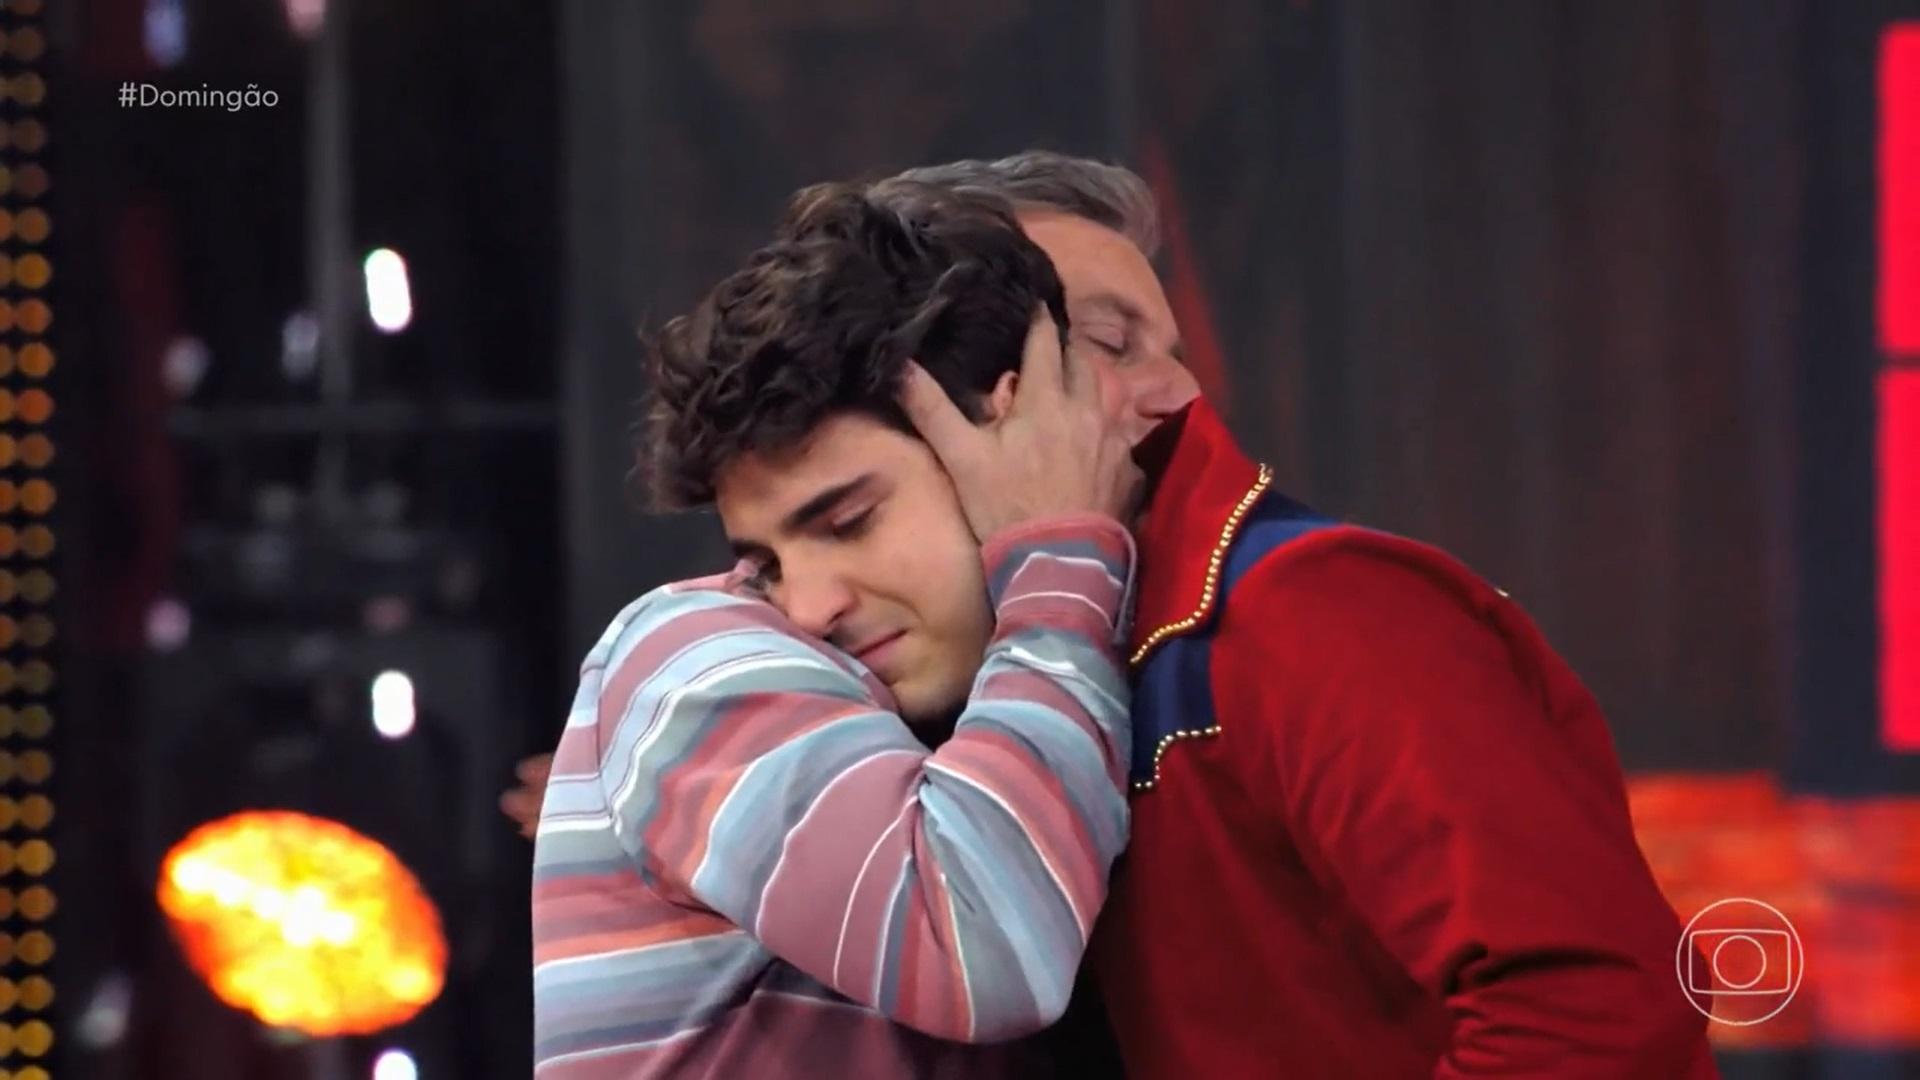 João Liberato sendo consolado por Luciano Huck após receber vídeos de familiares